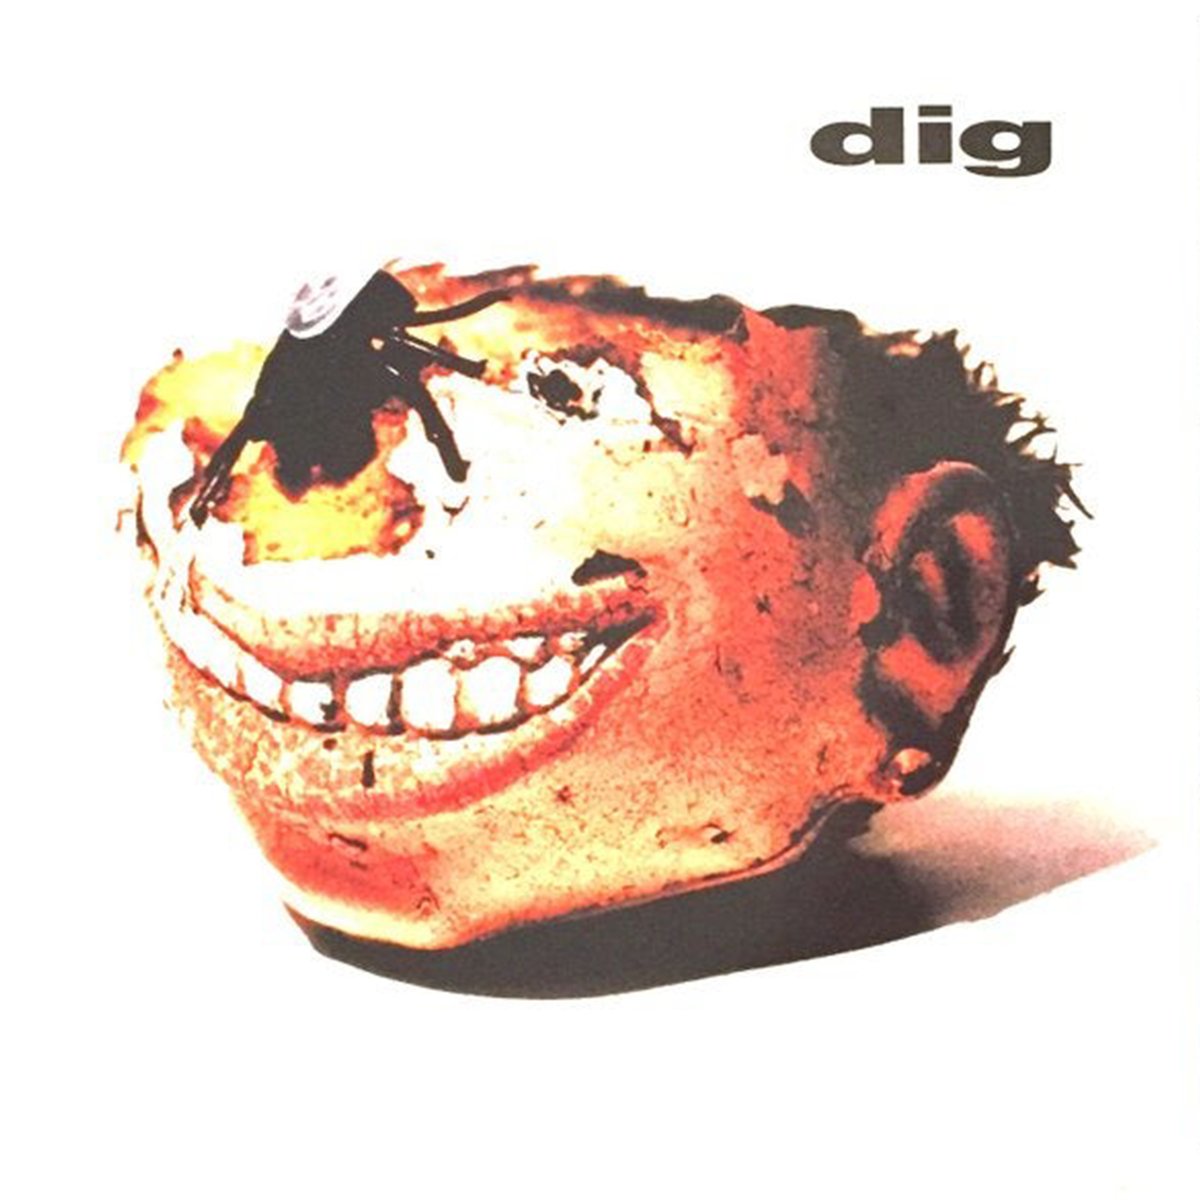 Image of official - dig - "dig" promo poster / original print album release poster